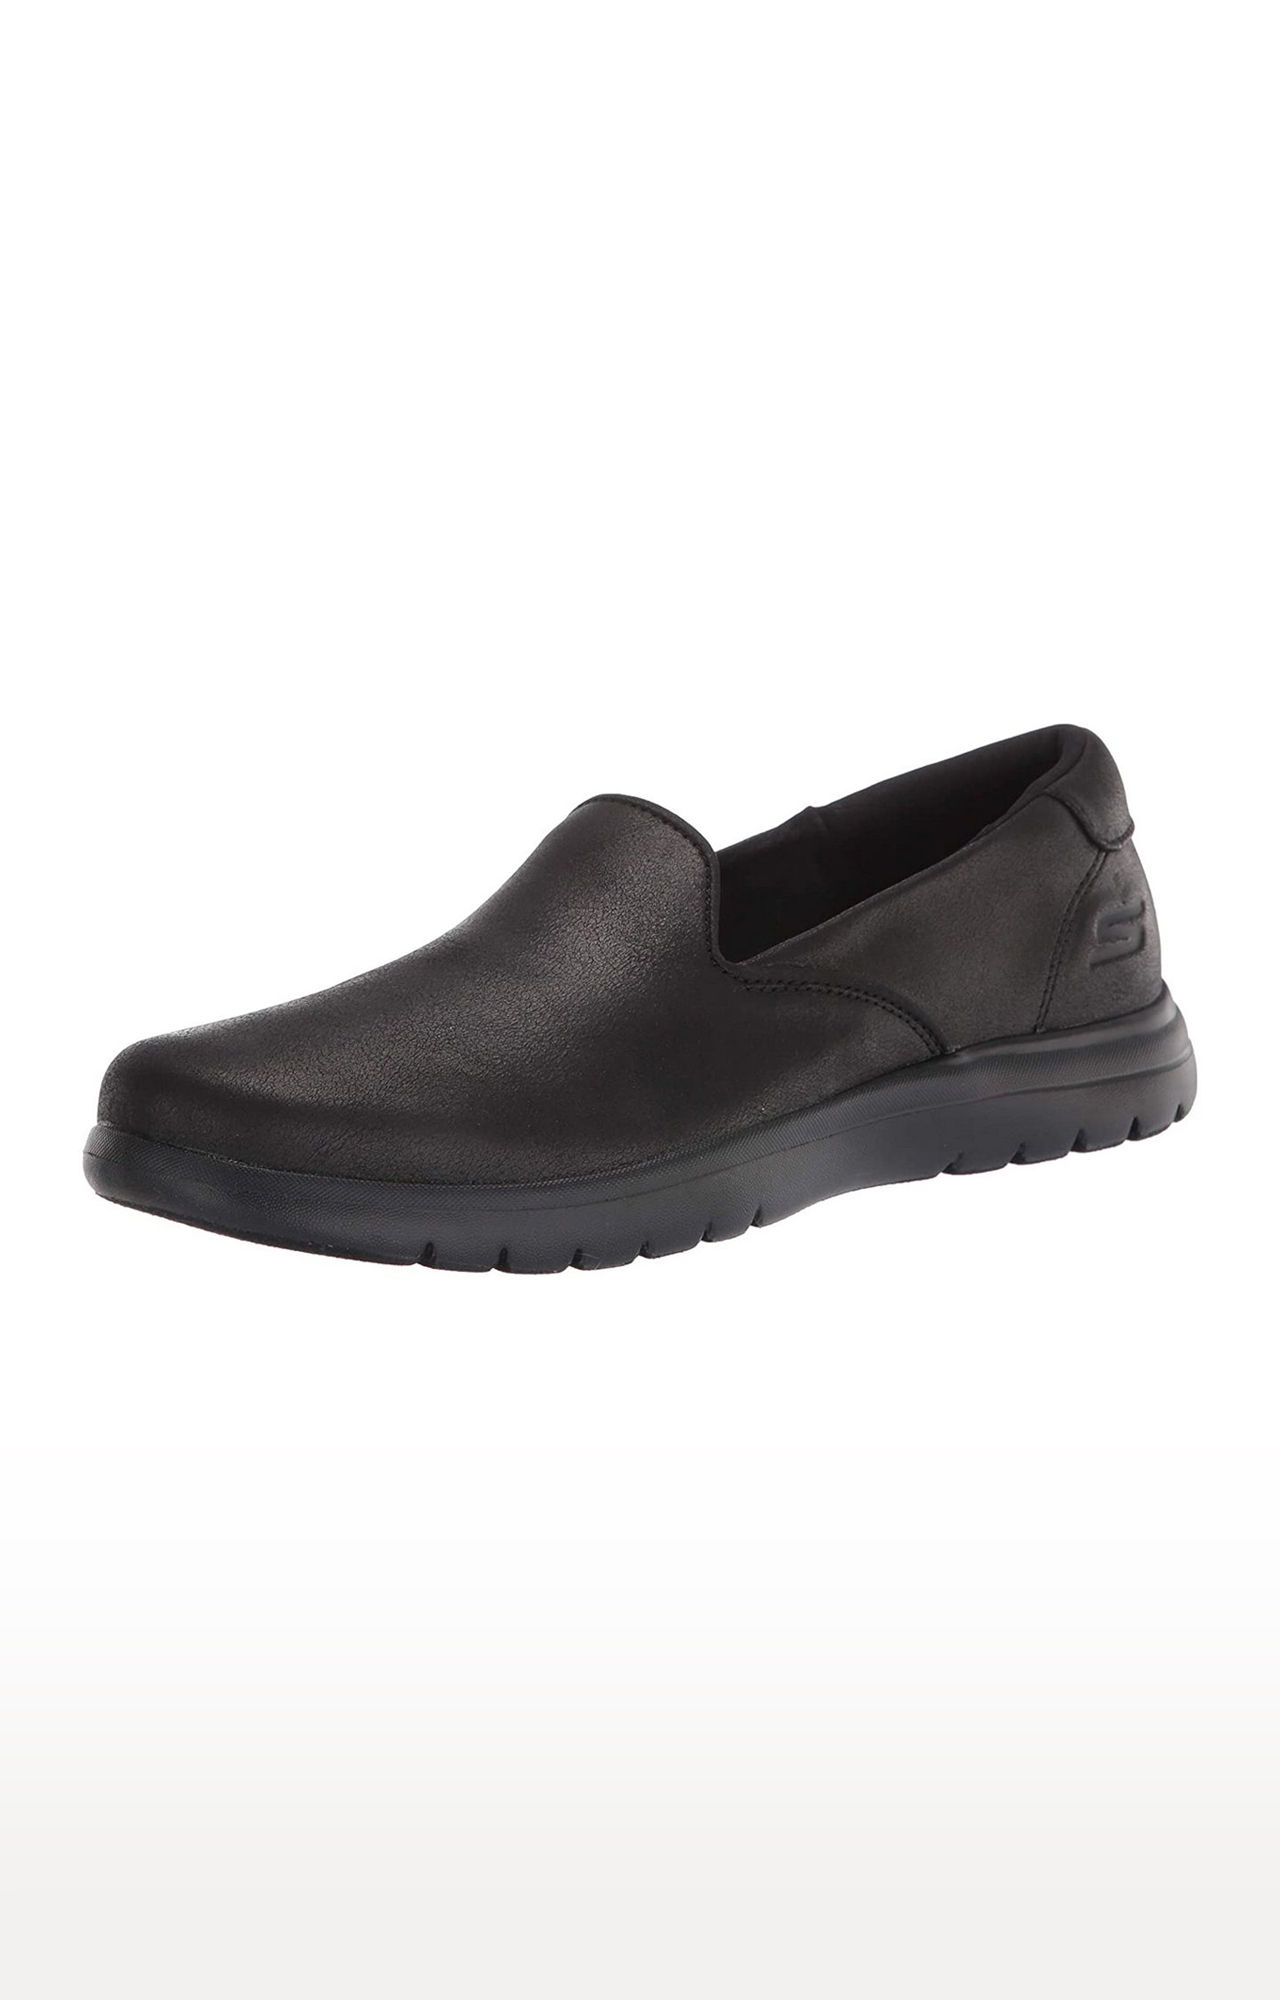 Skechers | Skechers womens ON-THE-GO FLEX LAVISH BLACK Walking Shoes - (136414-BBK)